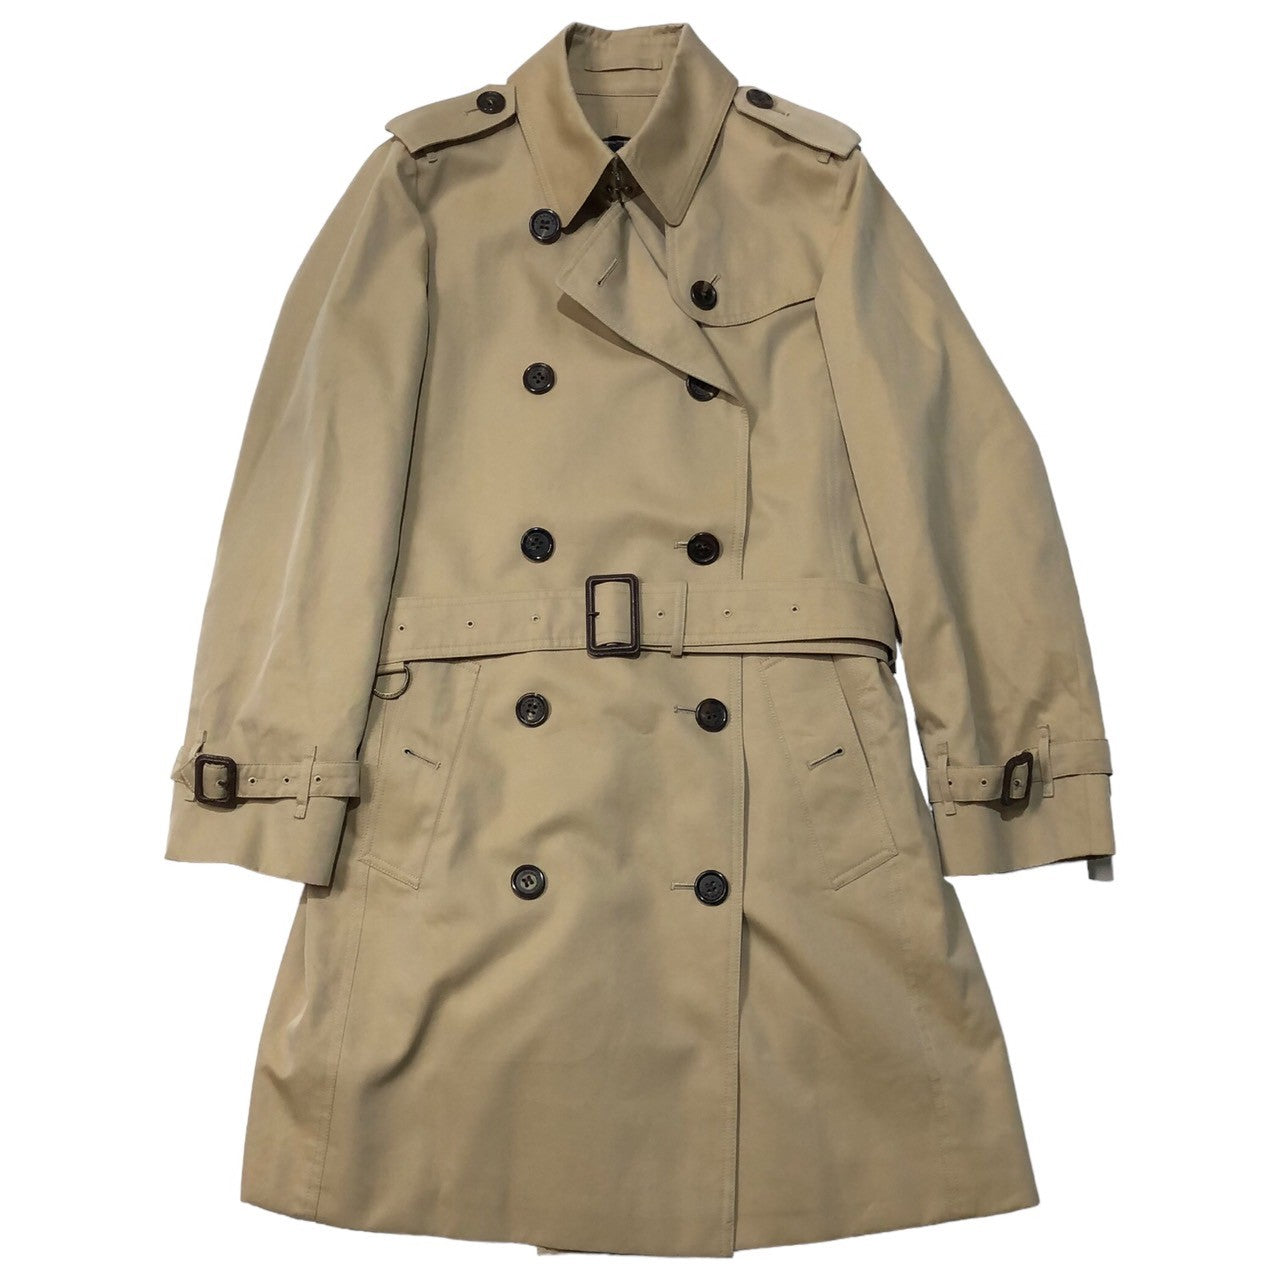 BURBERRY LONDON(バーバリーロンドン) trench coat with liner ライナー付 トレンチコート B1A59-430-51 38(M) ベージュ